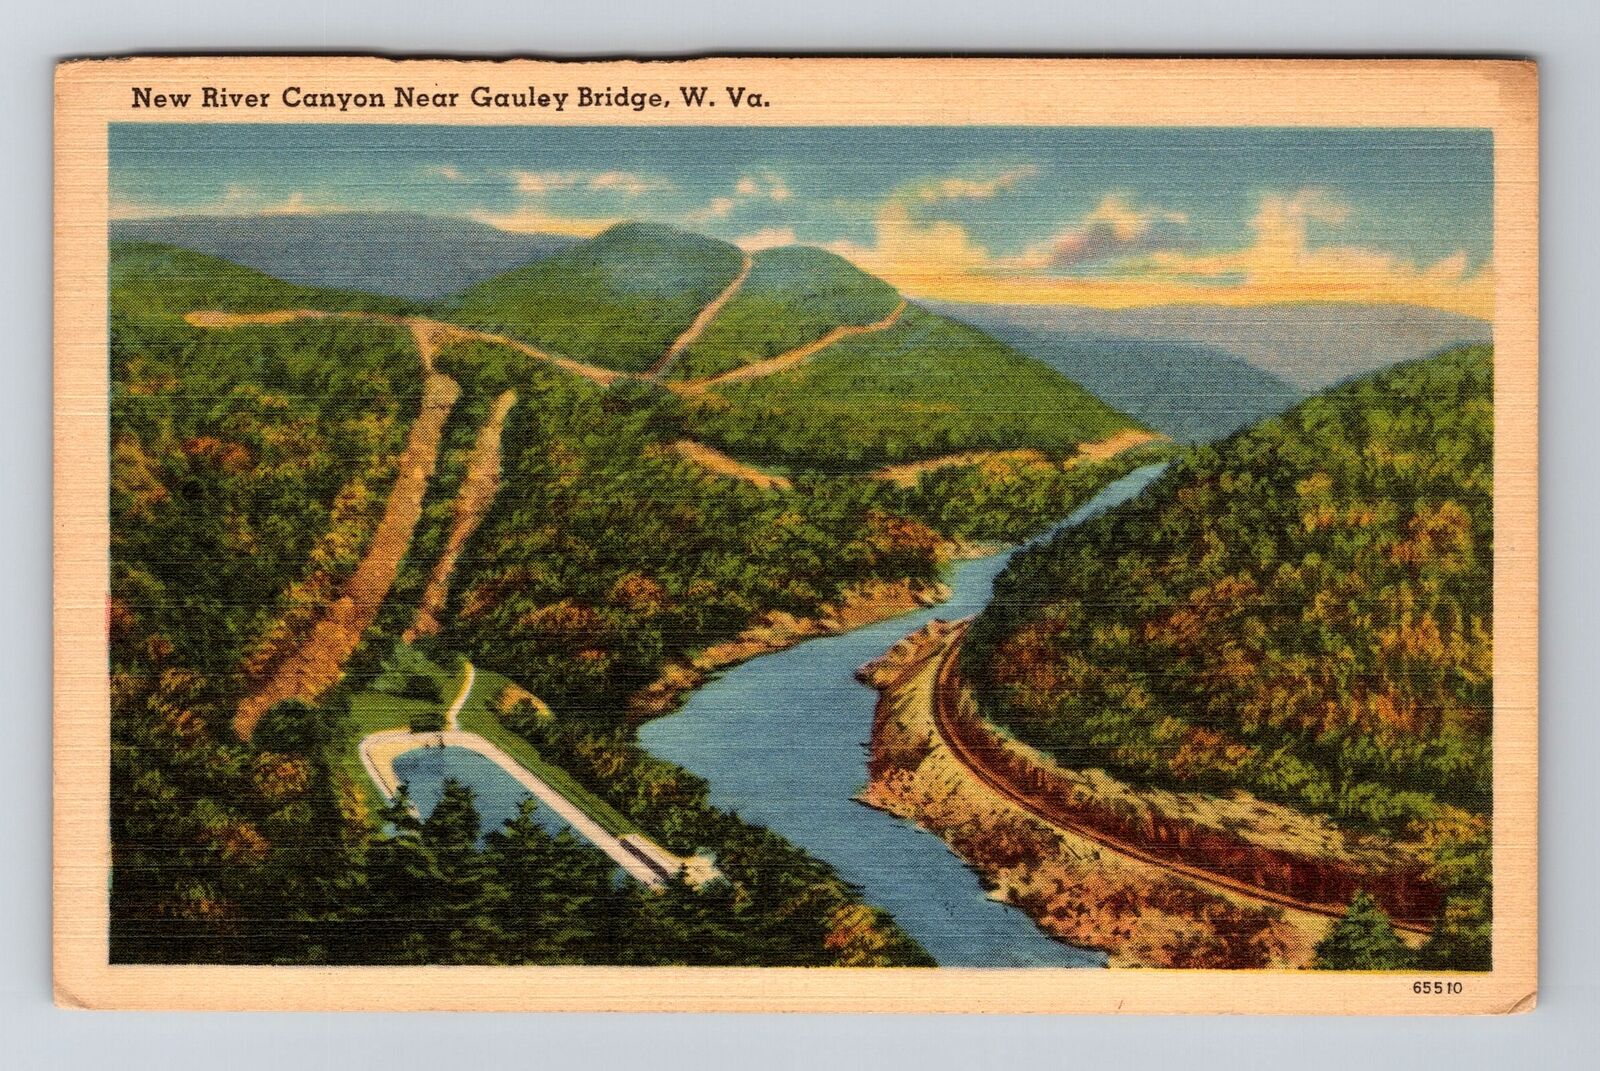 Gauley Bridge WV-West Virginia, New River Canyon, Vintage Postcard